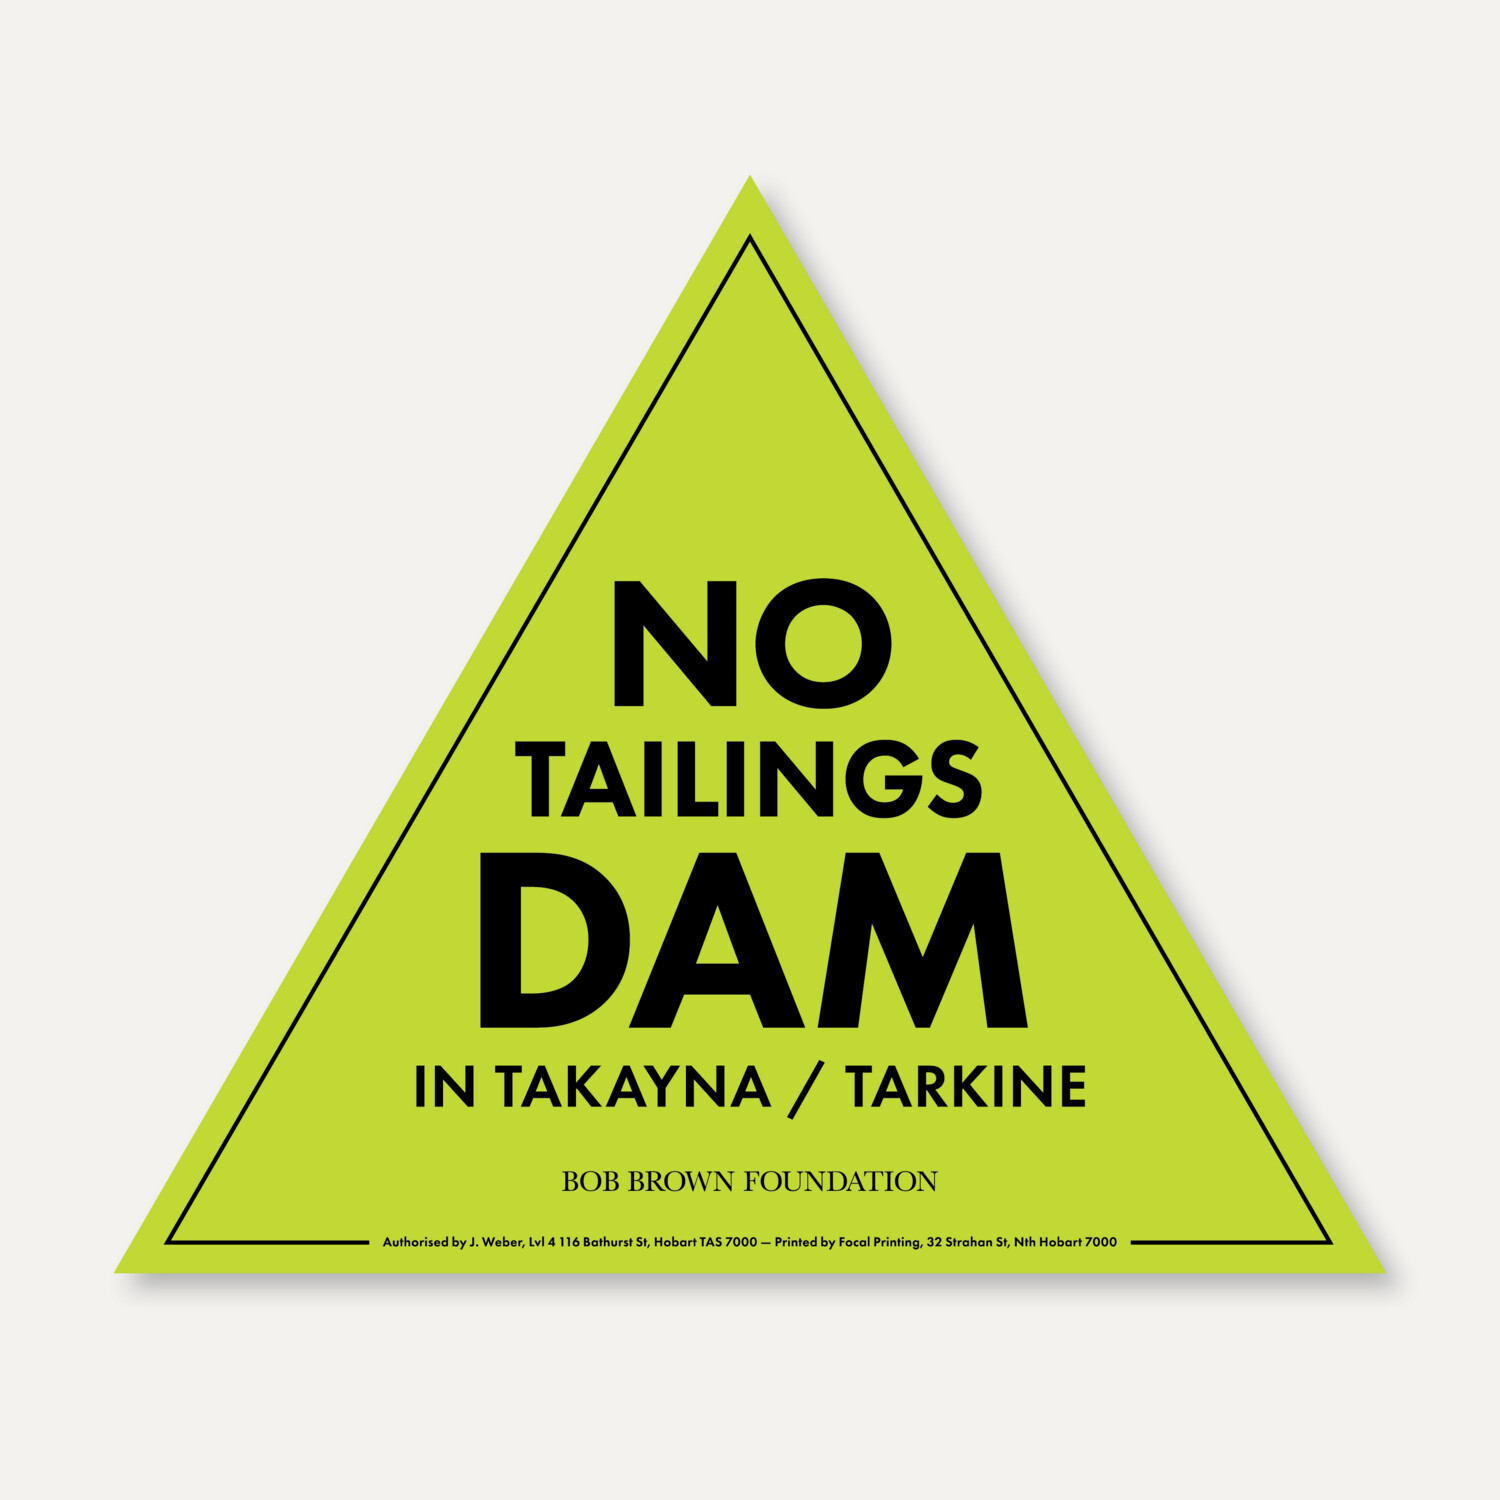 No Tailings Dam in takayna / Tarkine sticker